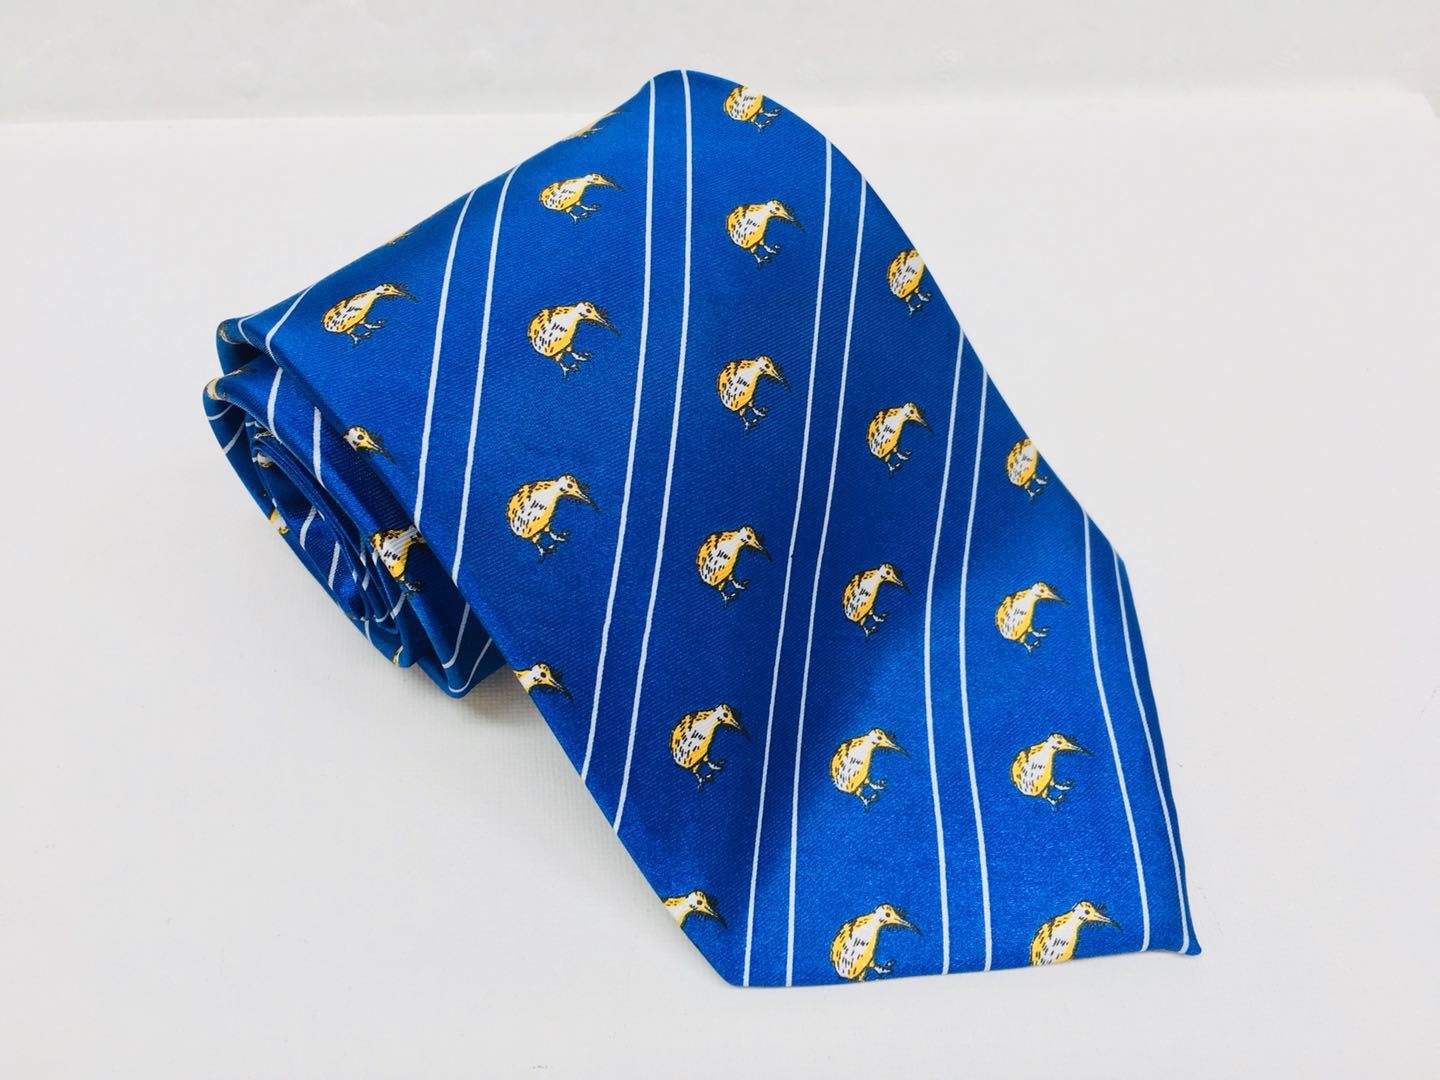 Tie Kiwi Blue Color